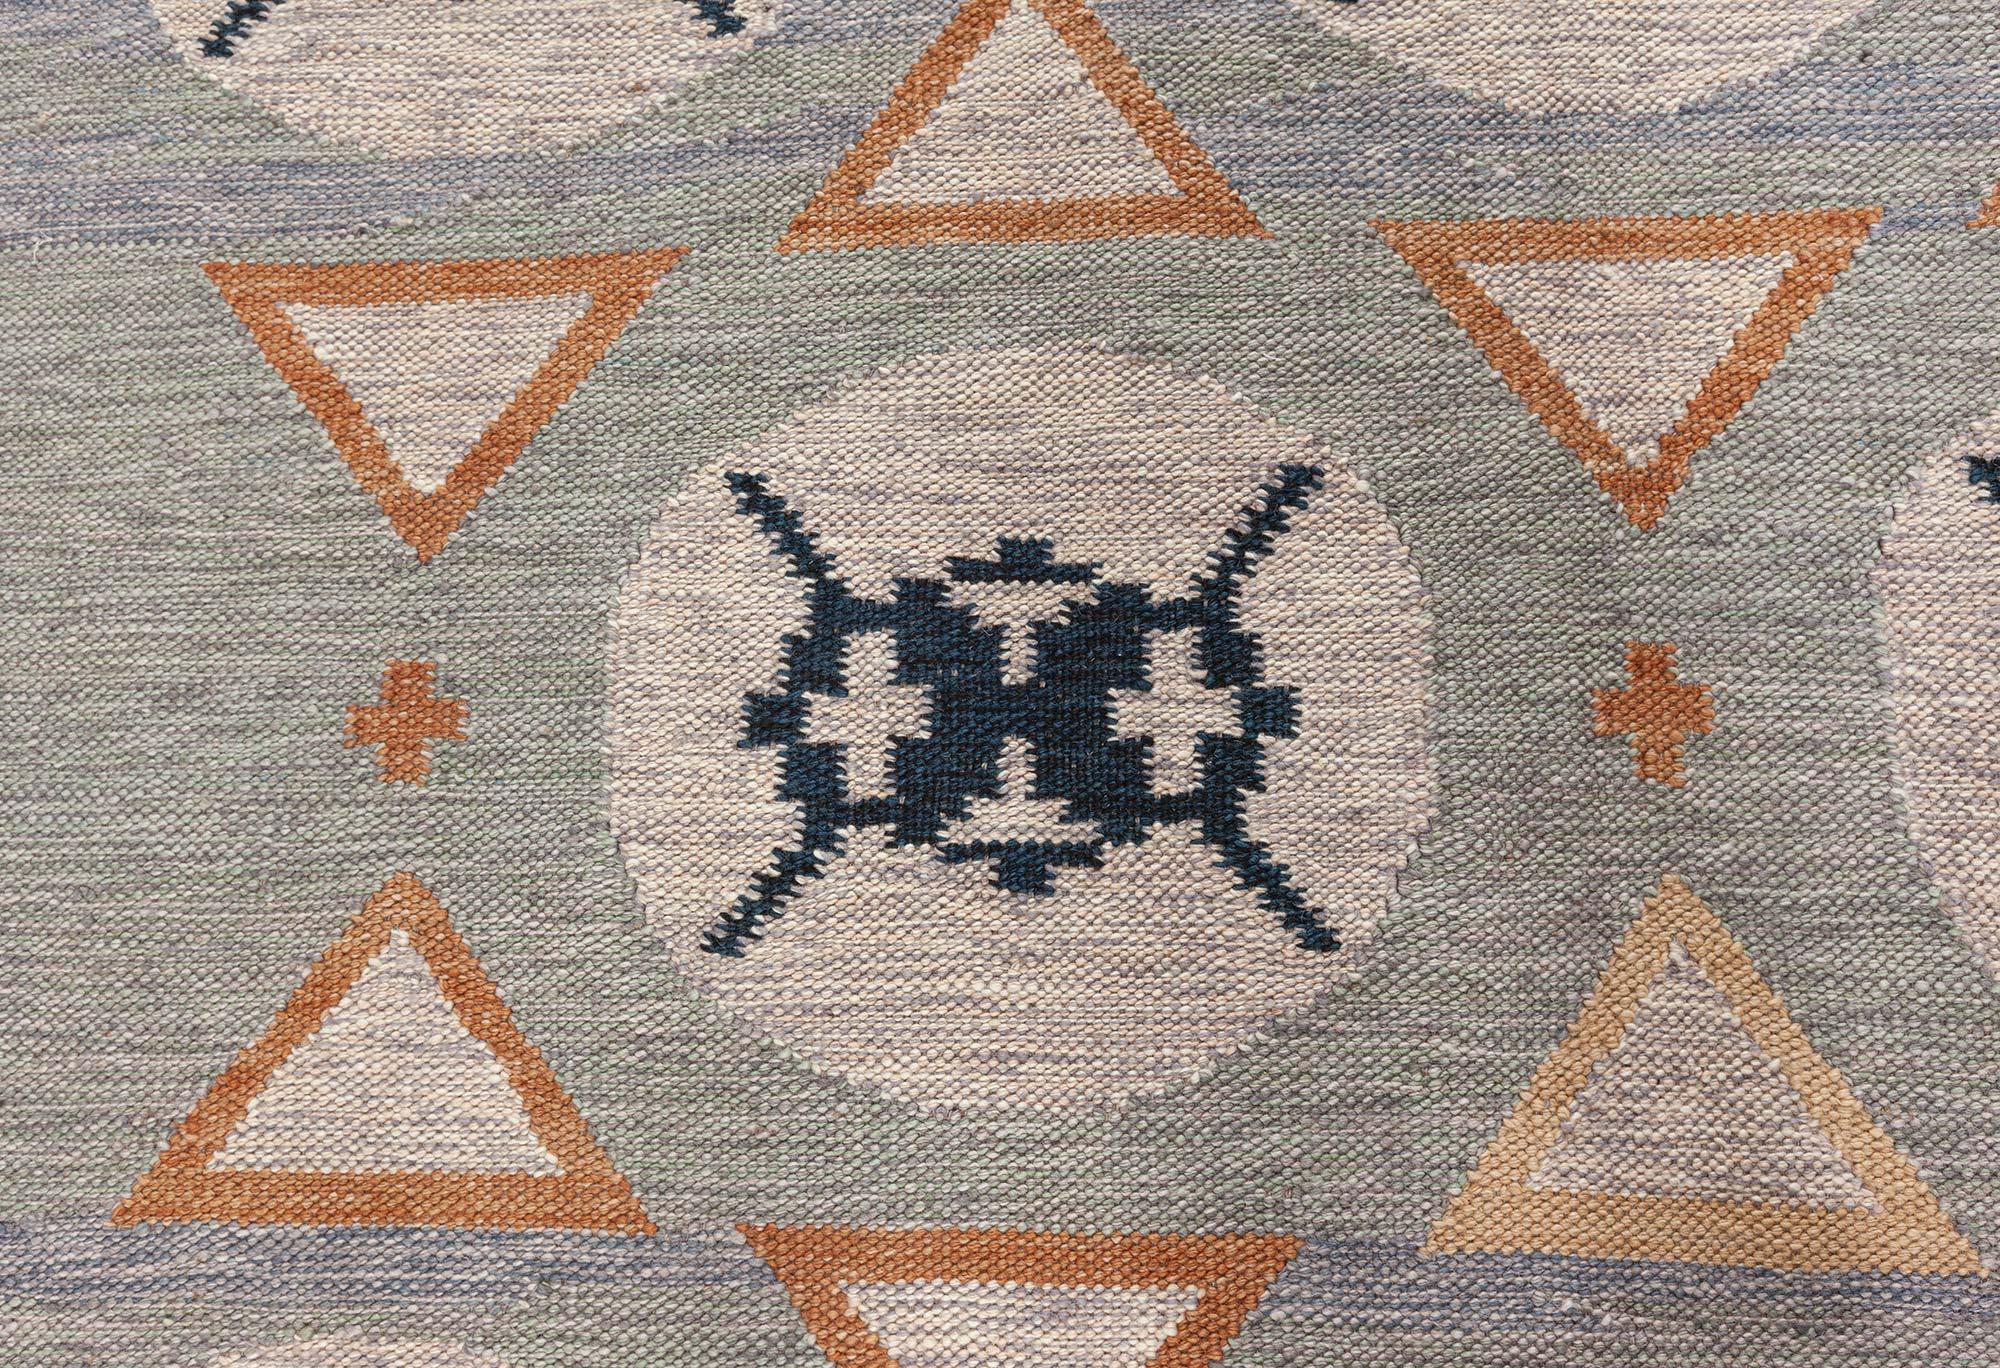 Modern Flat Weave rug by Doris Leslie Blau
Size: 6'0